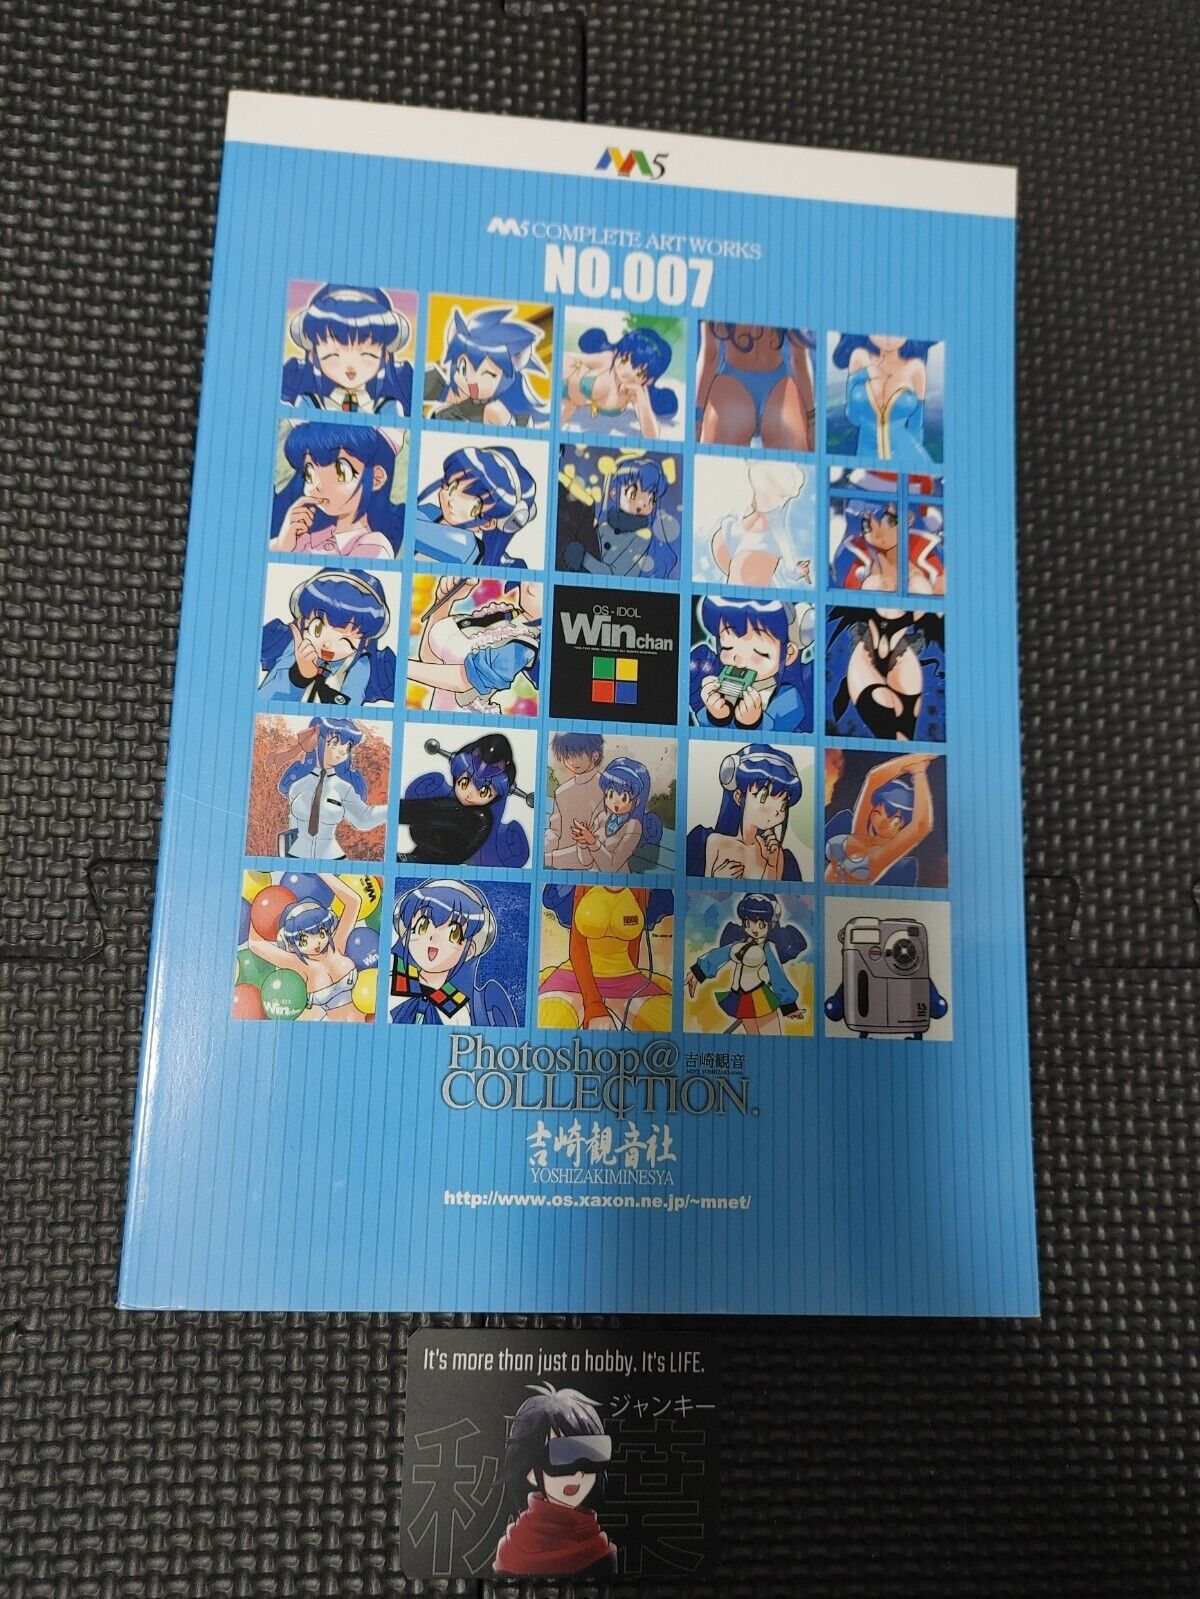 OS Idol Win chan Photoshop Collection Book Blue Mine Yoshizaki Japan Import